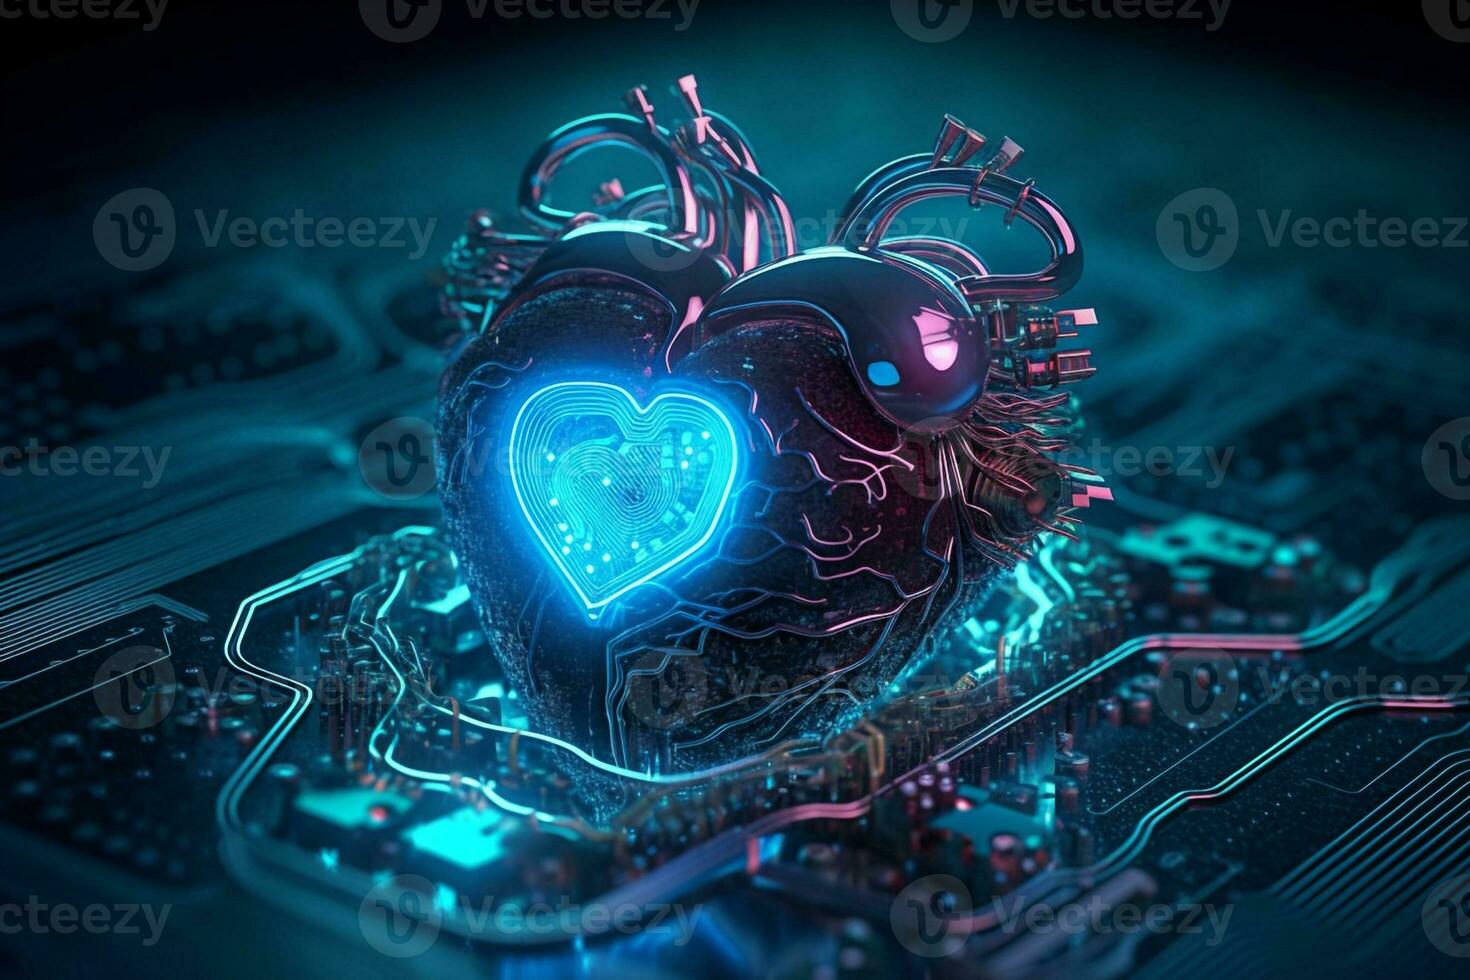 generative AI. Digital Love Blue Heart Shaped as Computer Circuit Board photo